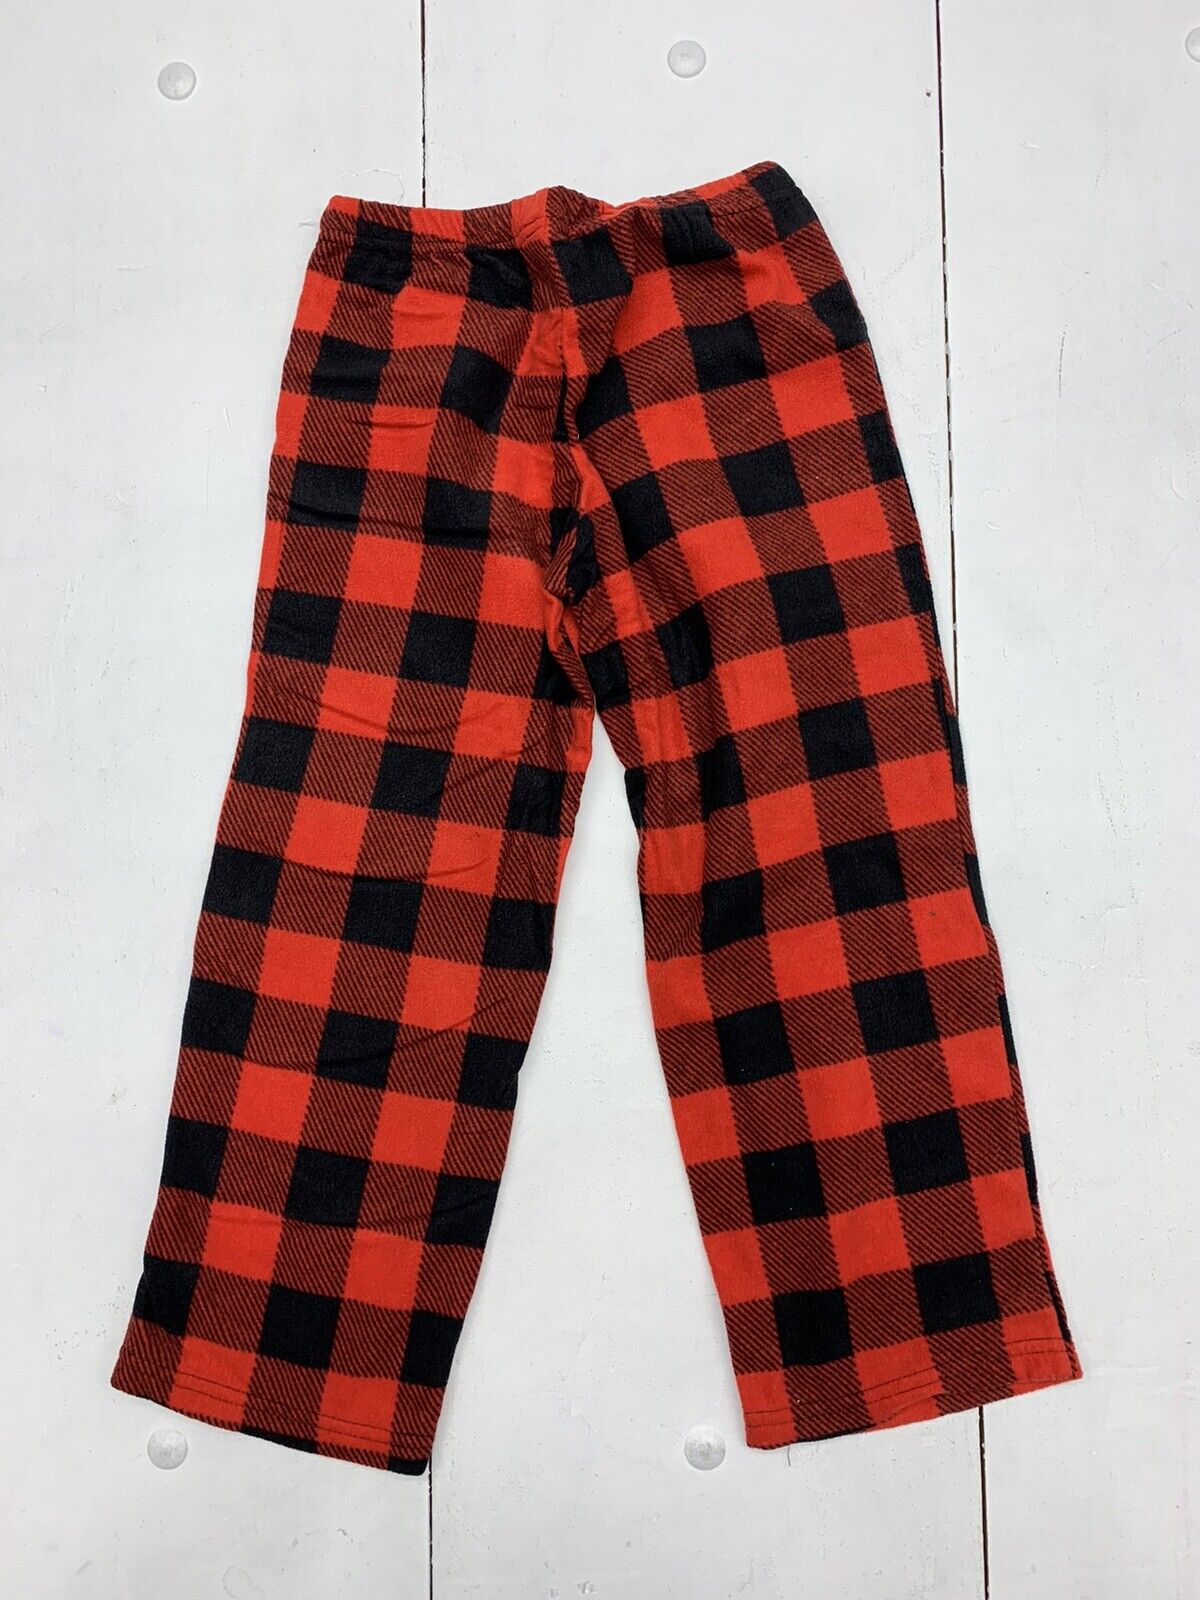 Wondershop Pajama pants